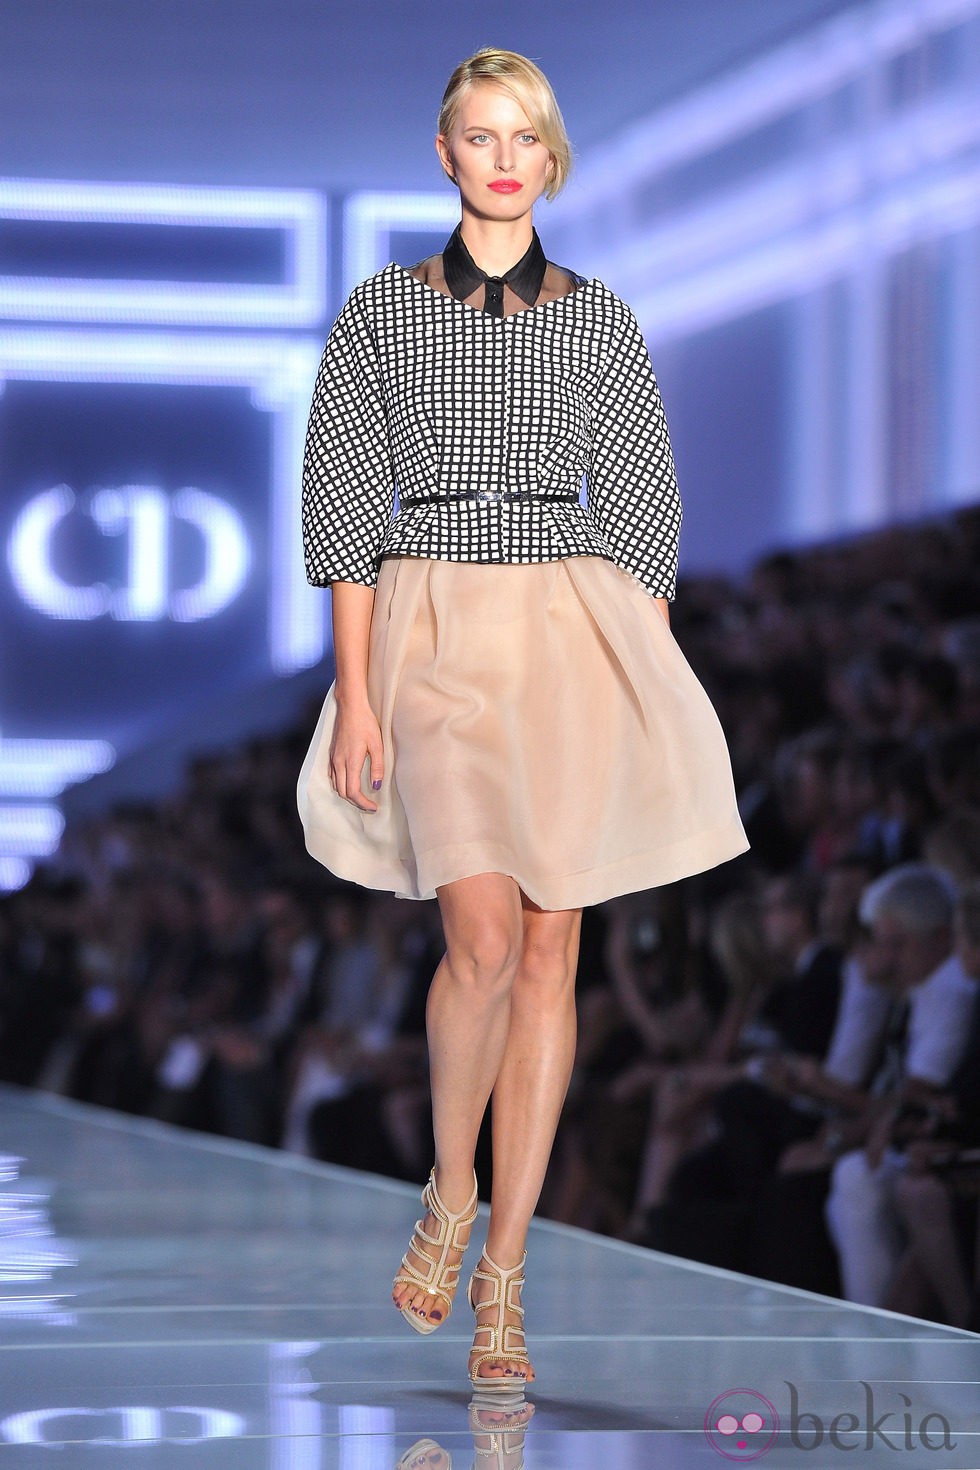 Karolina Kurkova desfilando para Christian Dior en la semana de la moda de París